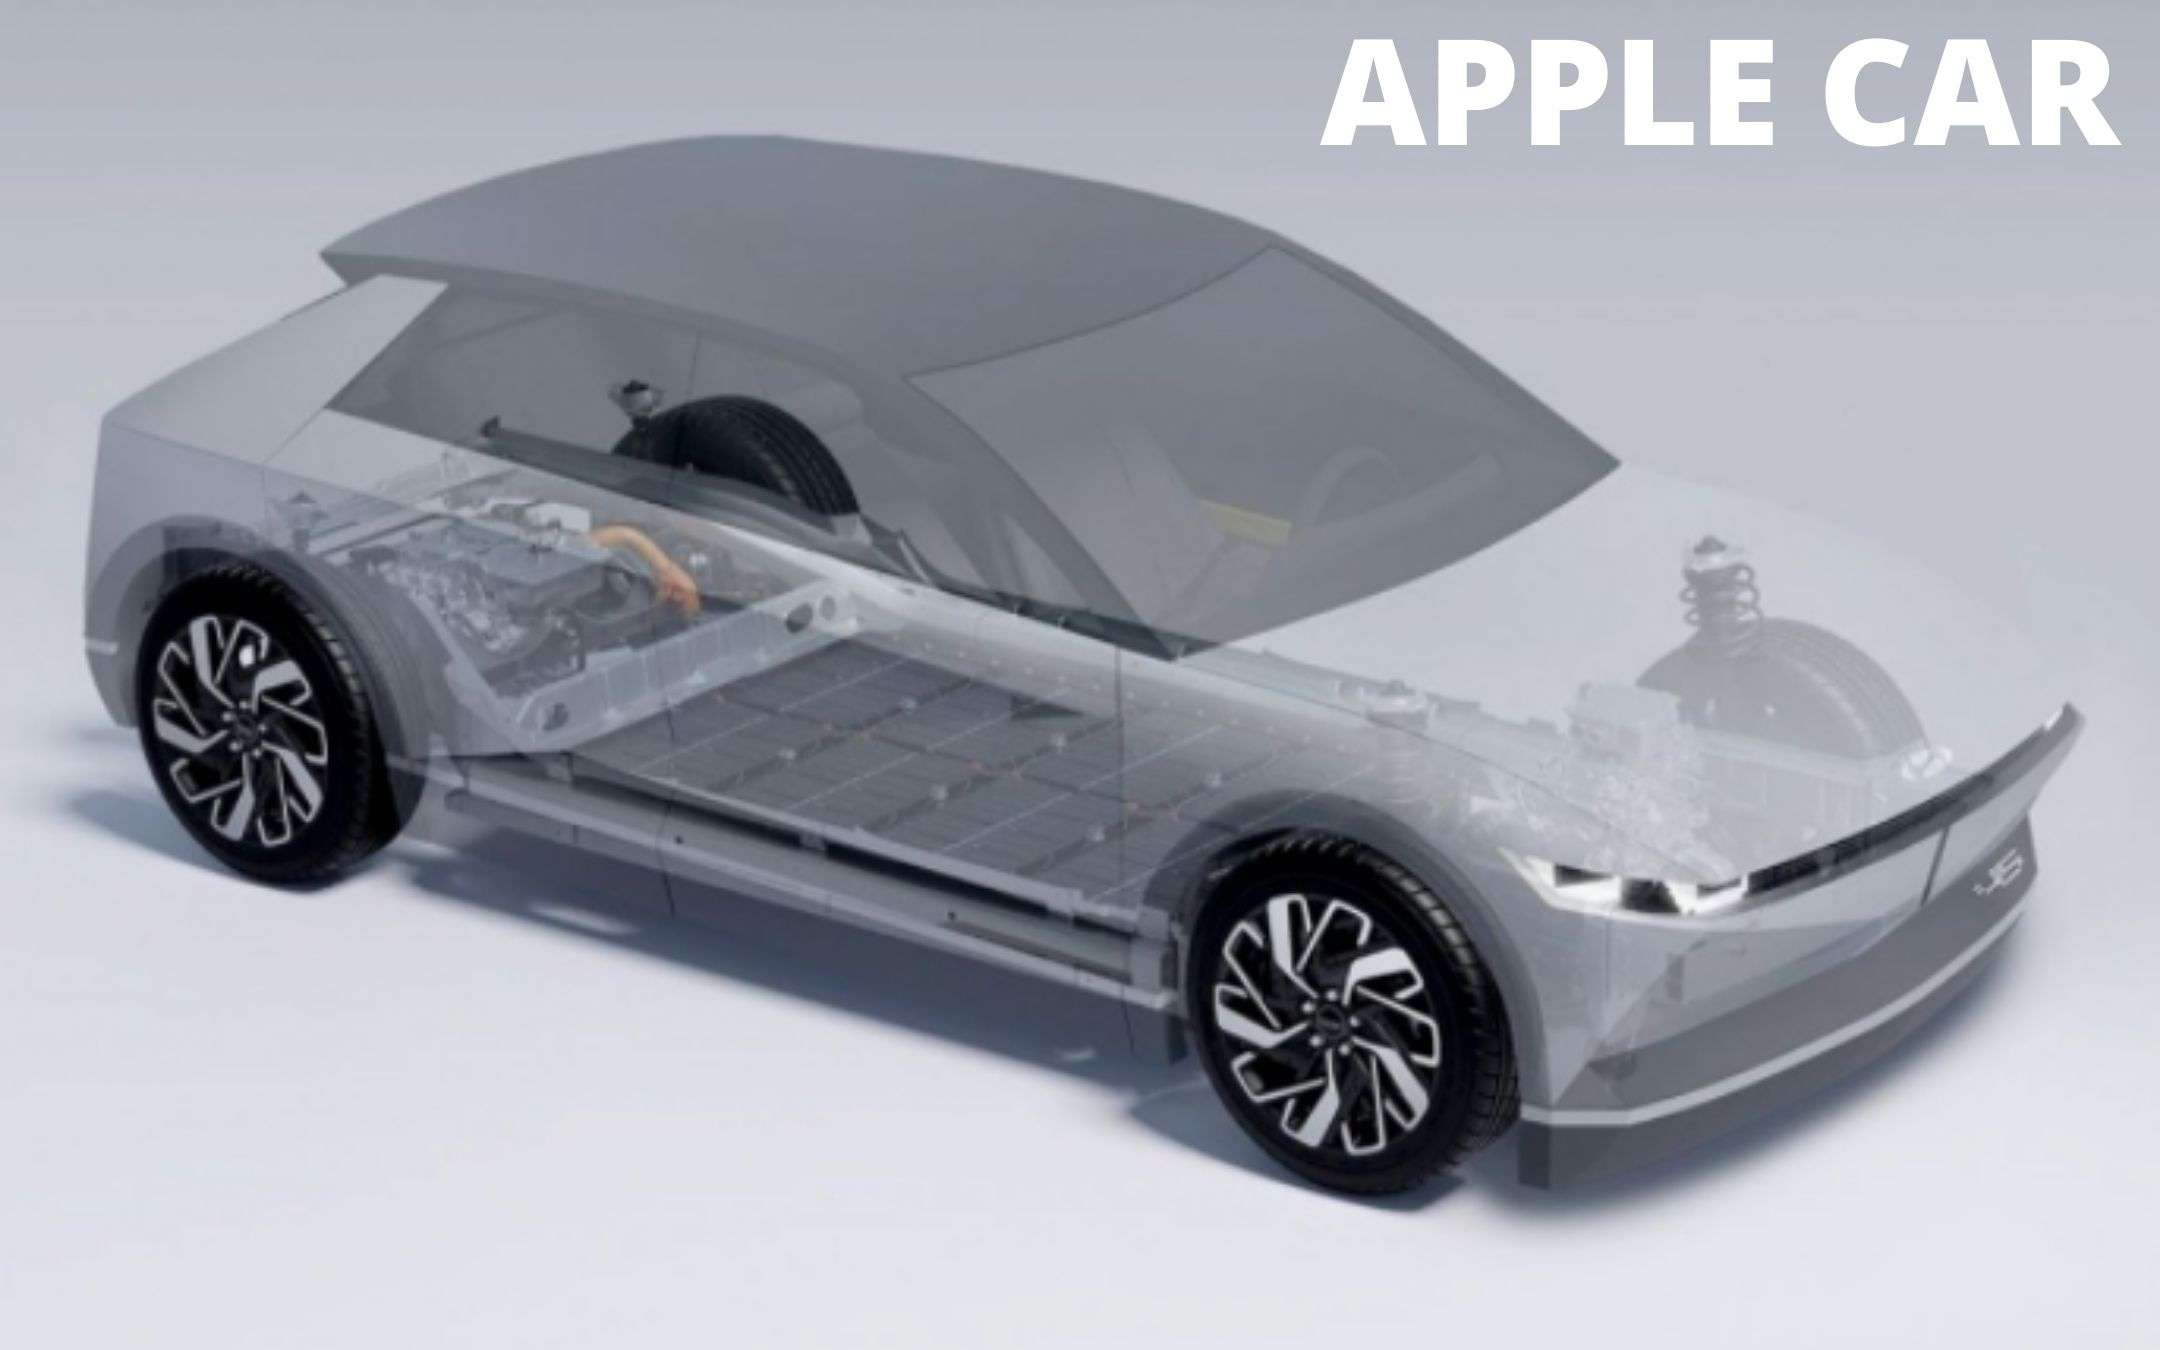 Apple Car come l'iPhone: il piano B di Tim Cook